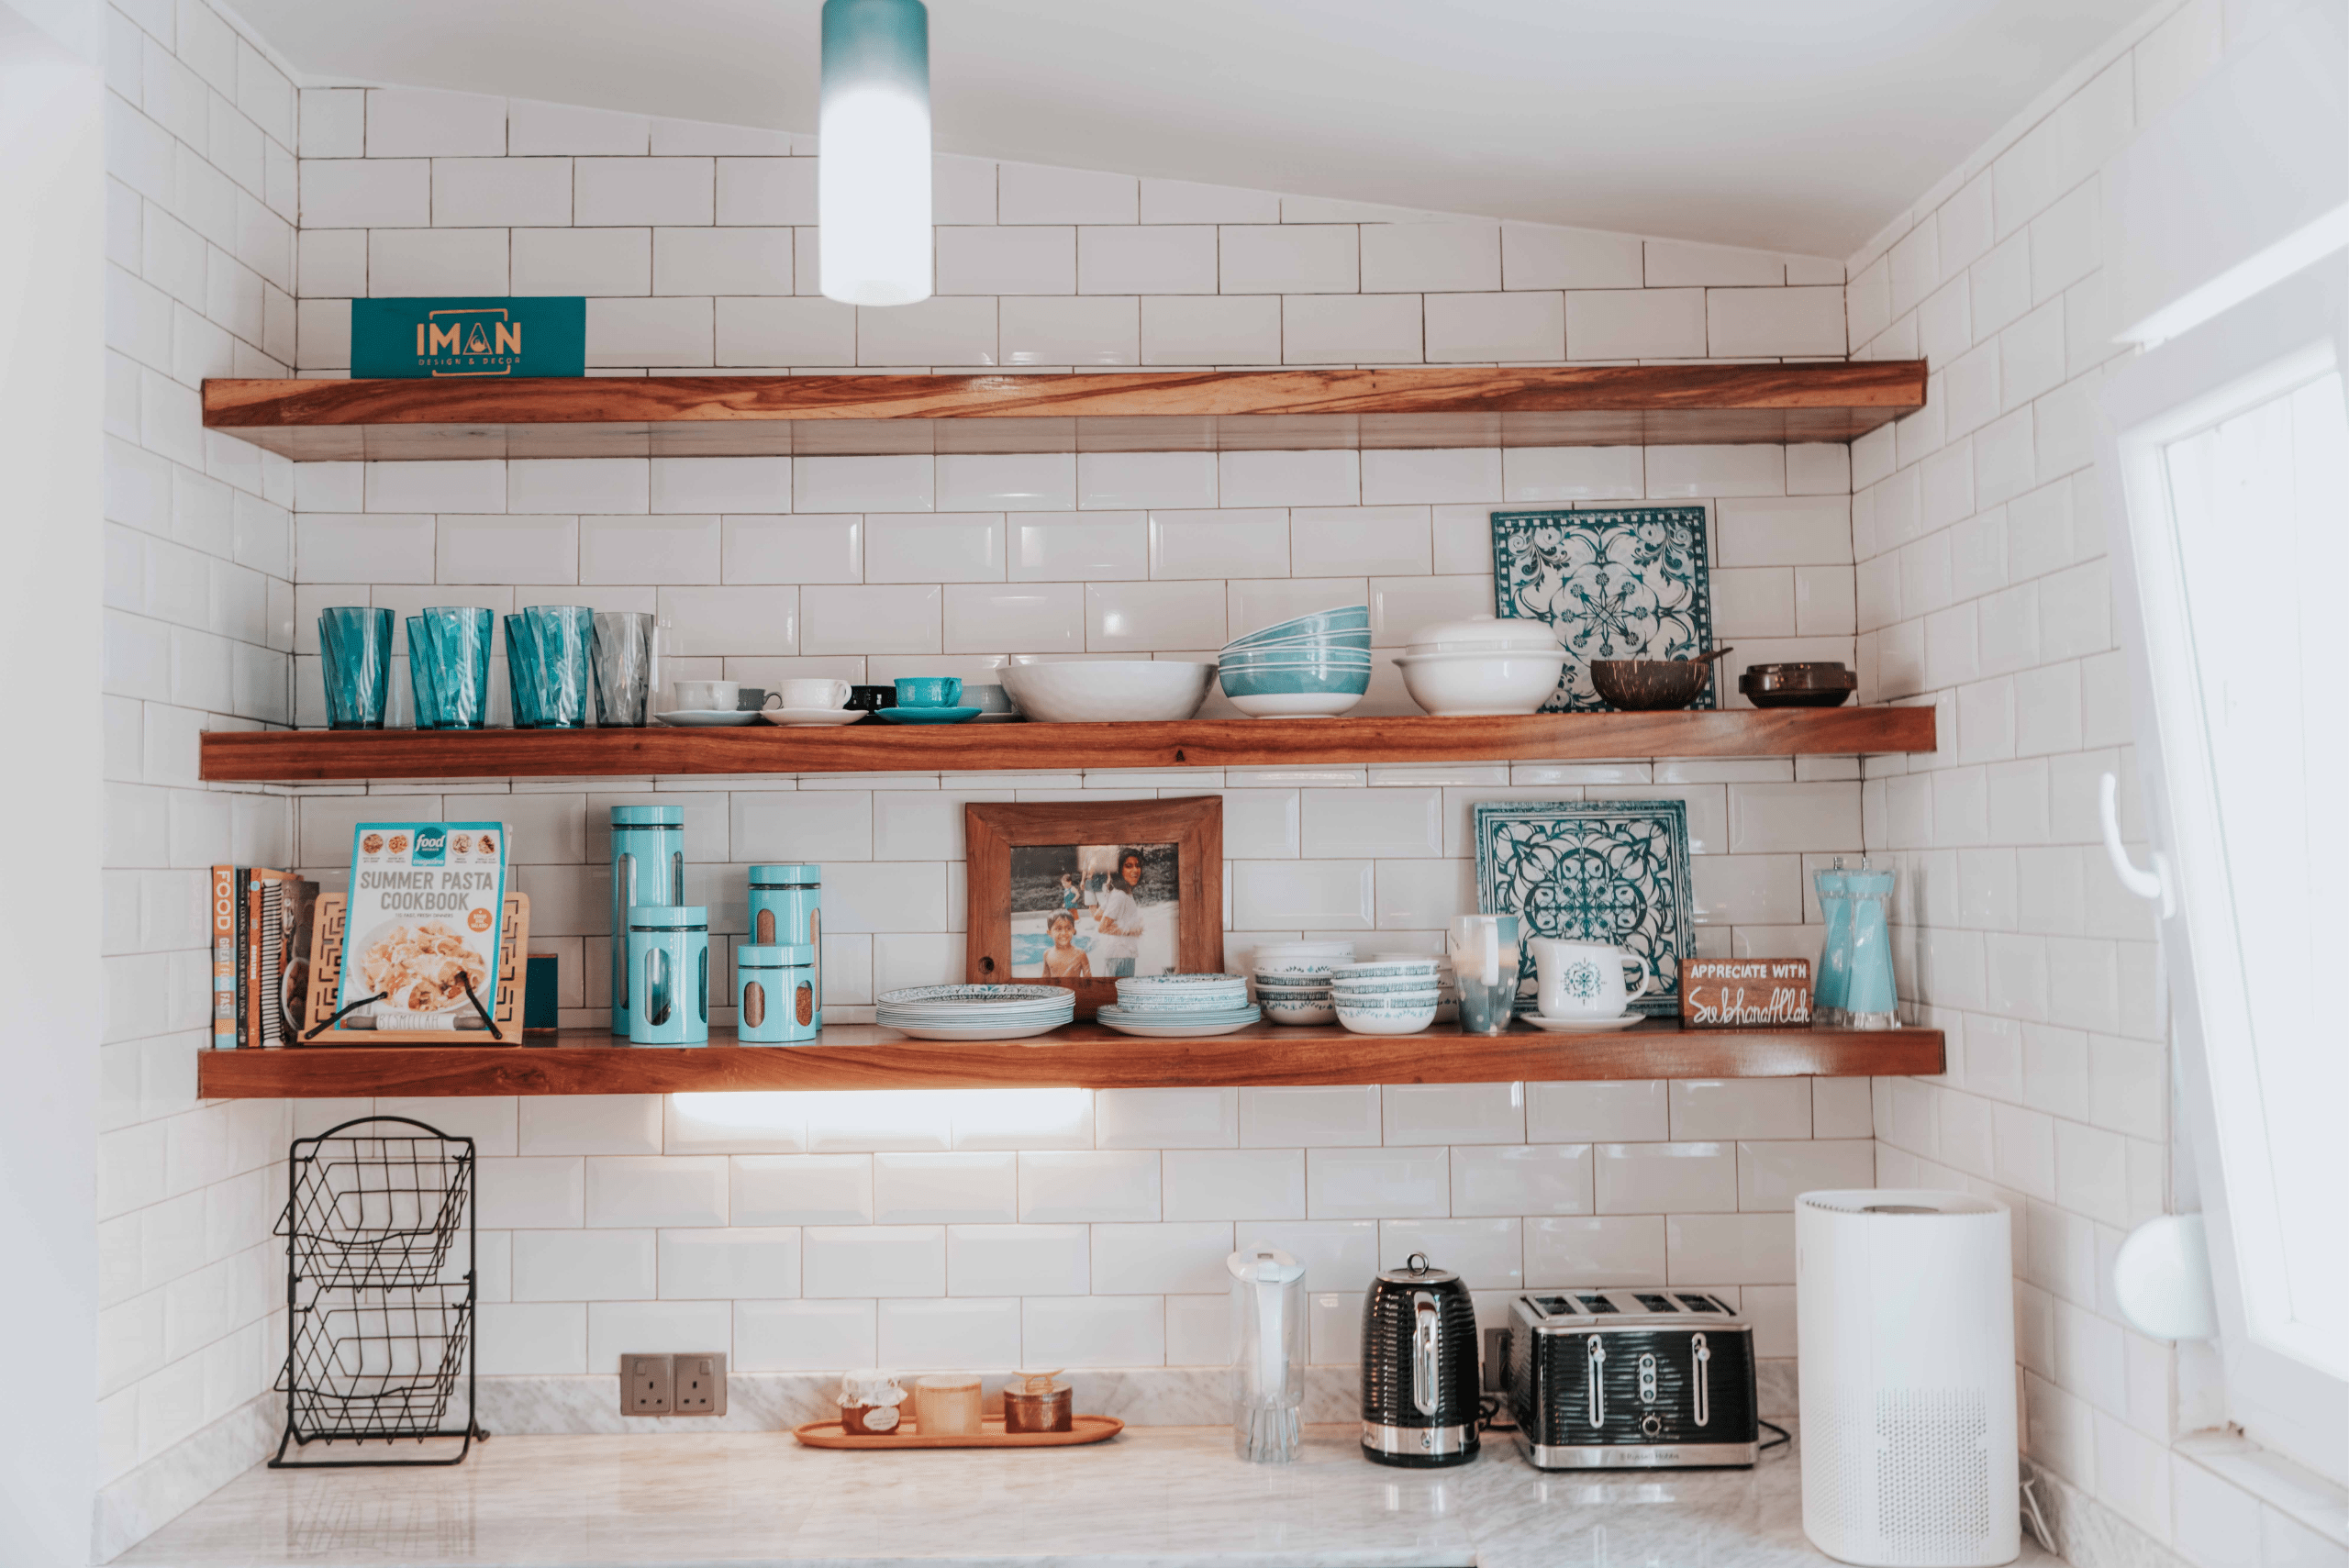 Kitchen floating shelves holding various kitchen items.